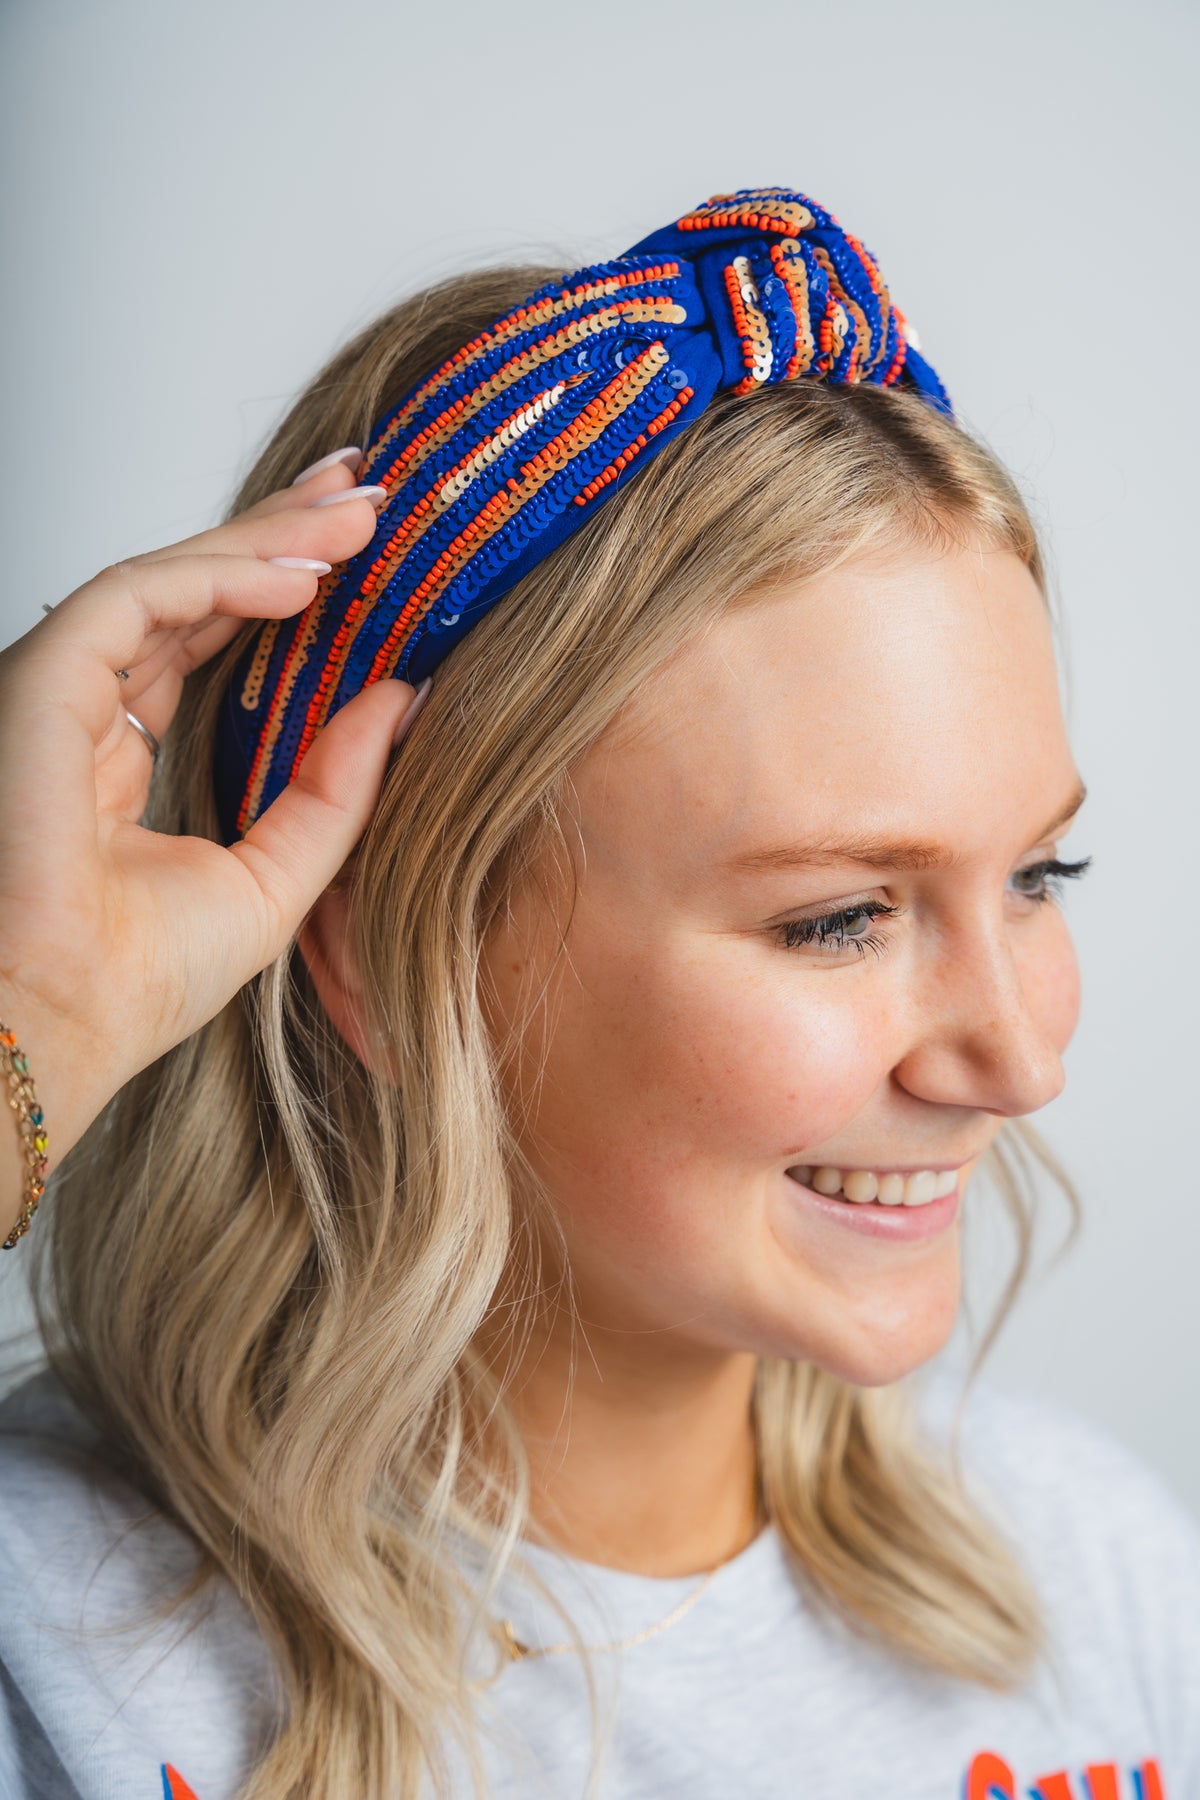 Embellished headband blue/orange - Trendy OKC Apparel at Lush Fashion Lounge Boutique in Oklahoma City